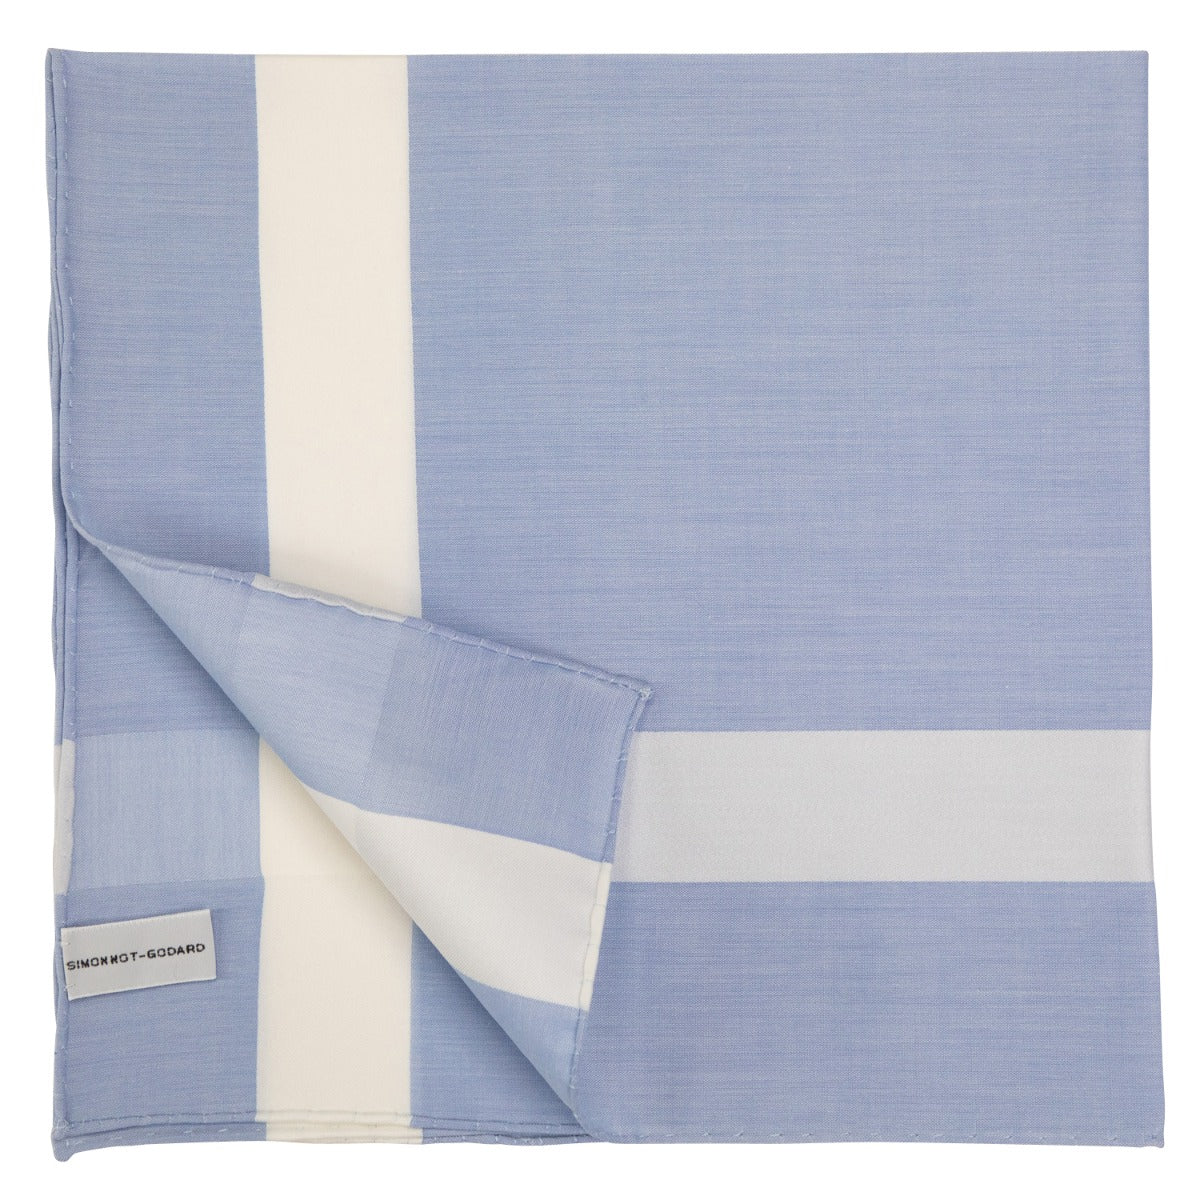 Simonnot Godard Sky Blue Handkerchief